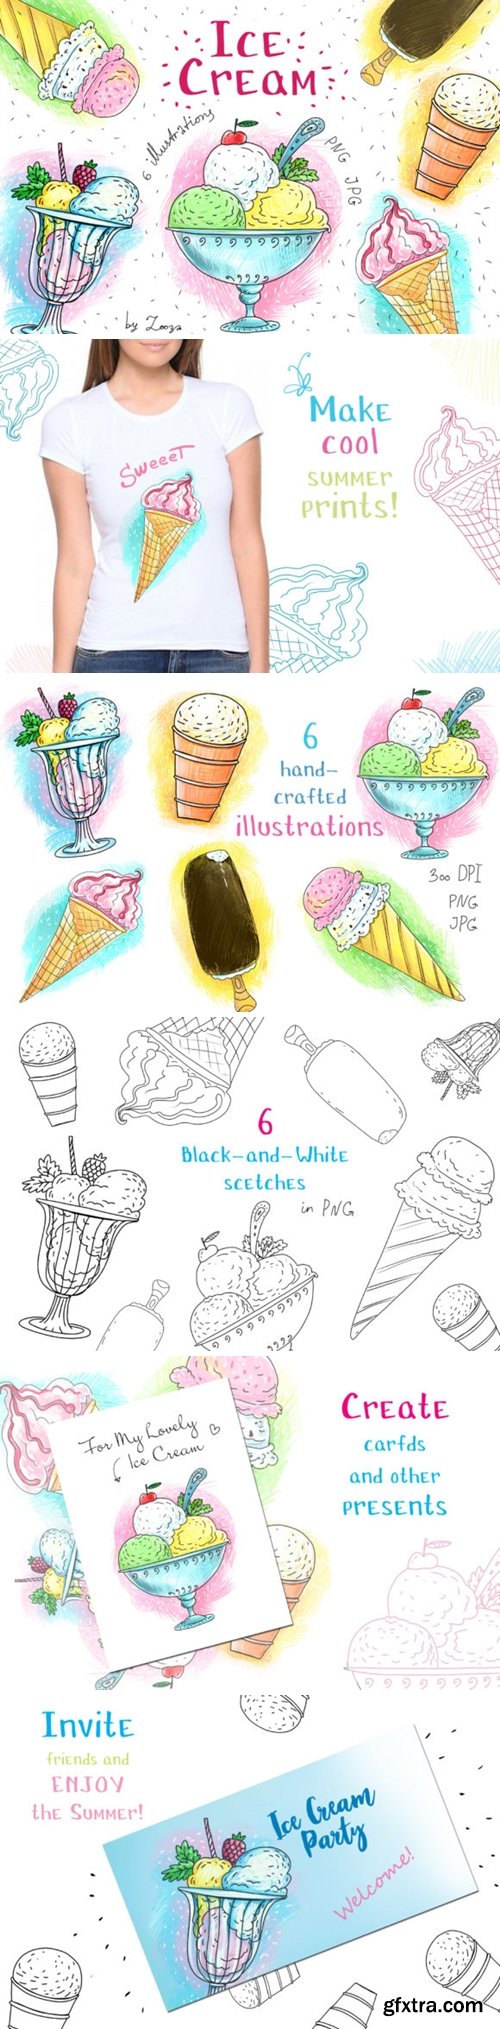 Ice Cream - 6 Hand-crafted Illustrations 1511439